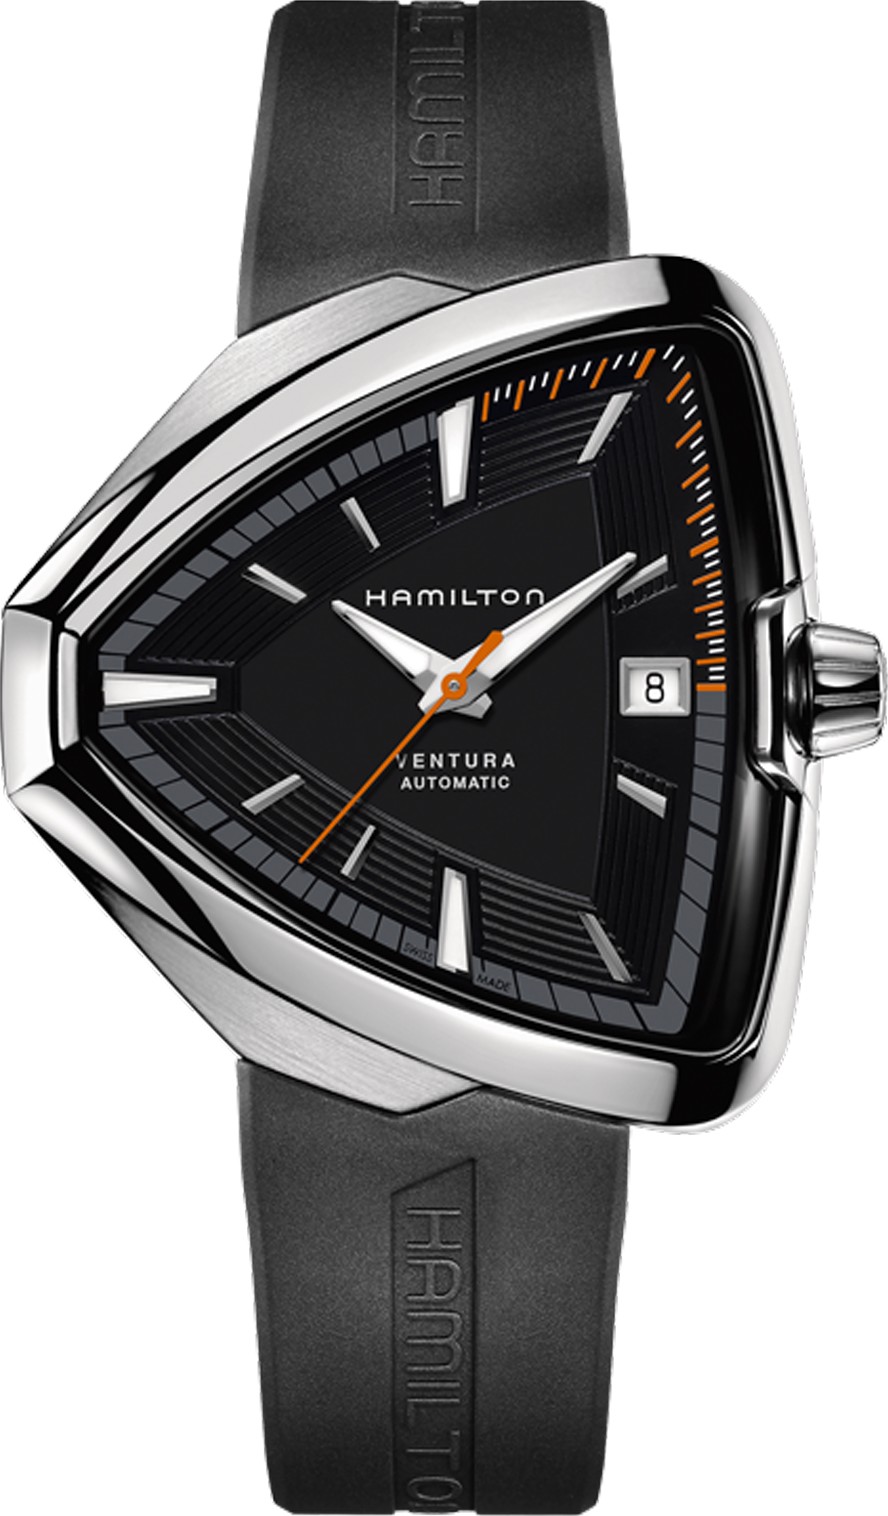 hamilton-ventura-elvis80-automatic-watch-42-5mm.jpg